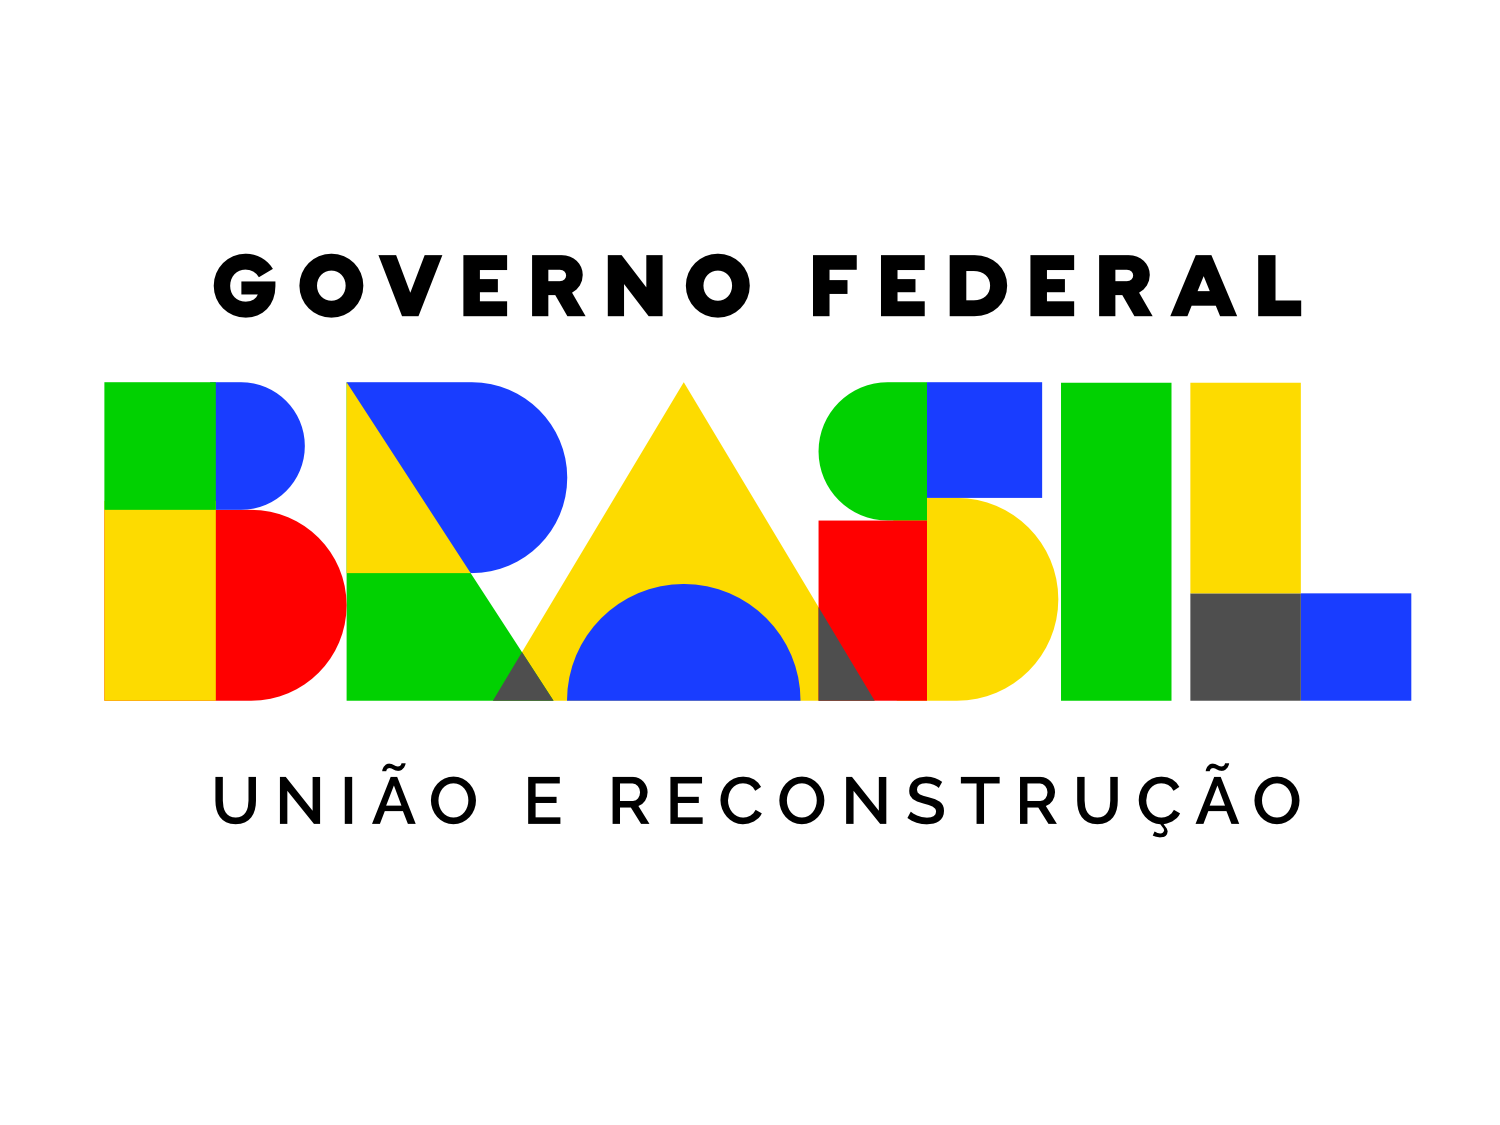 Governo Fedral Brasil Logo, Quelle: Wikimedia